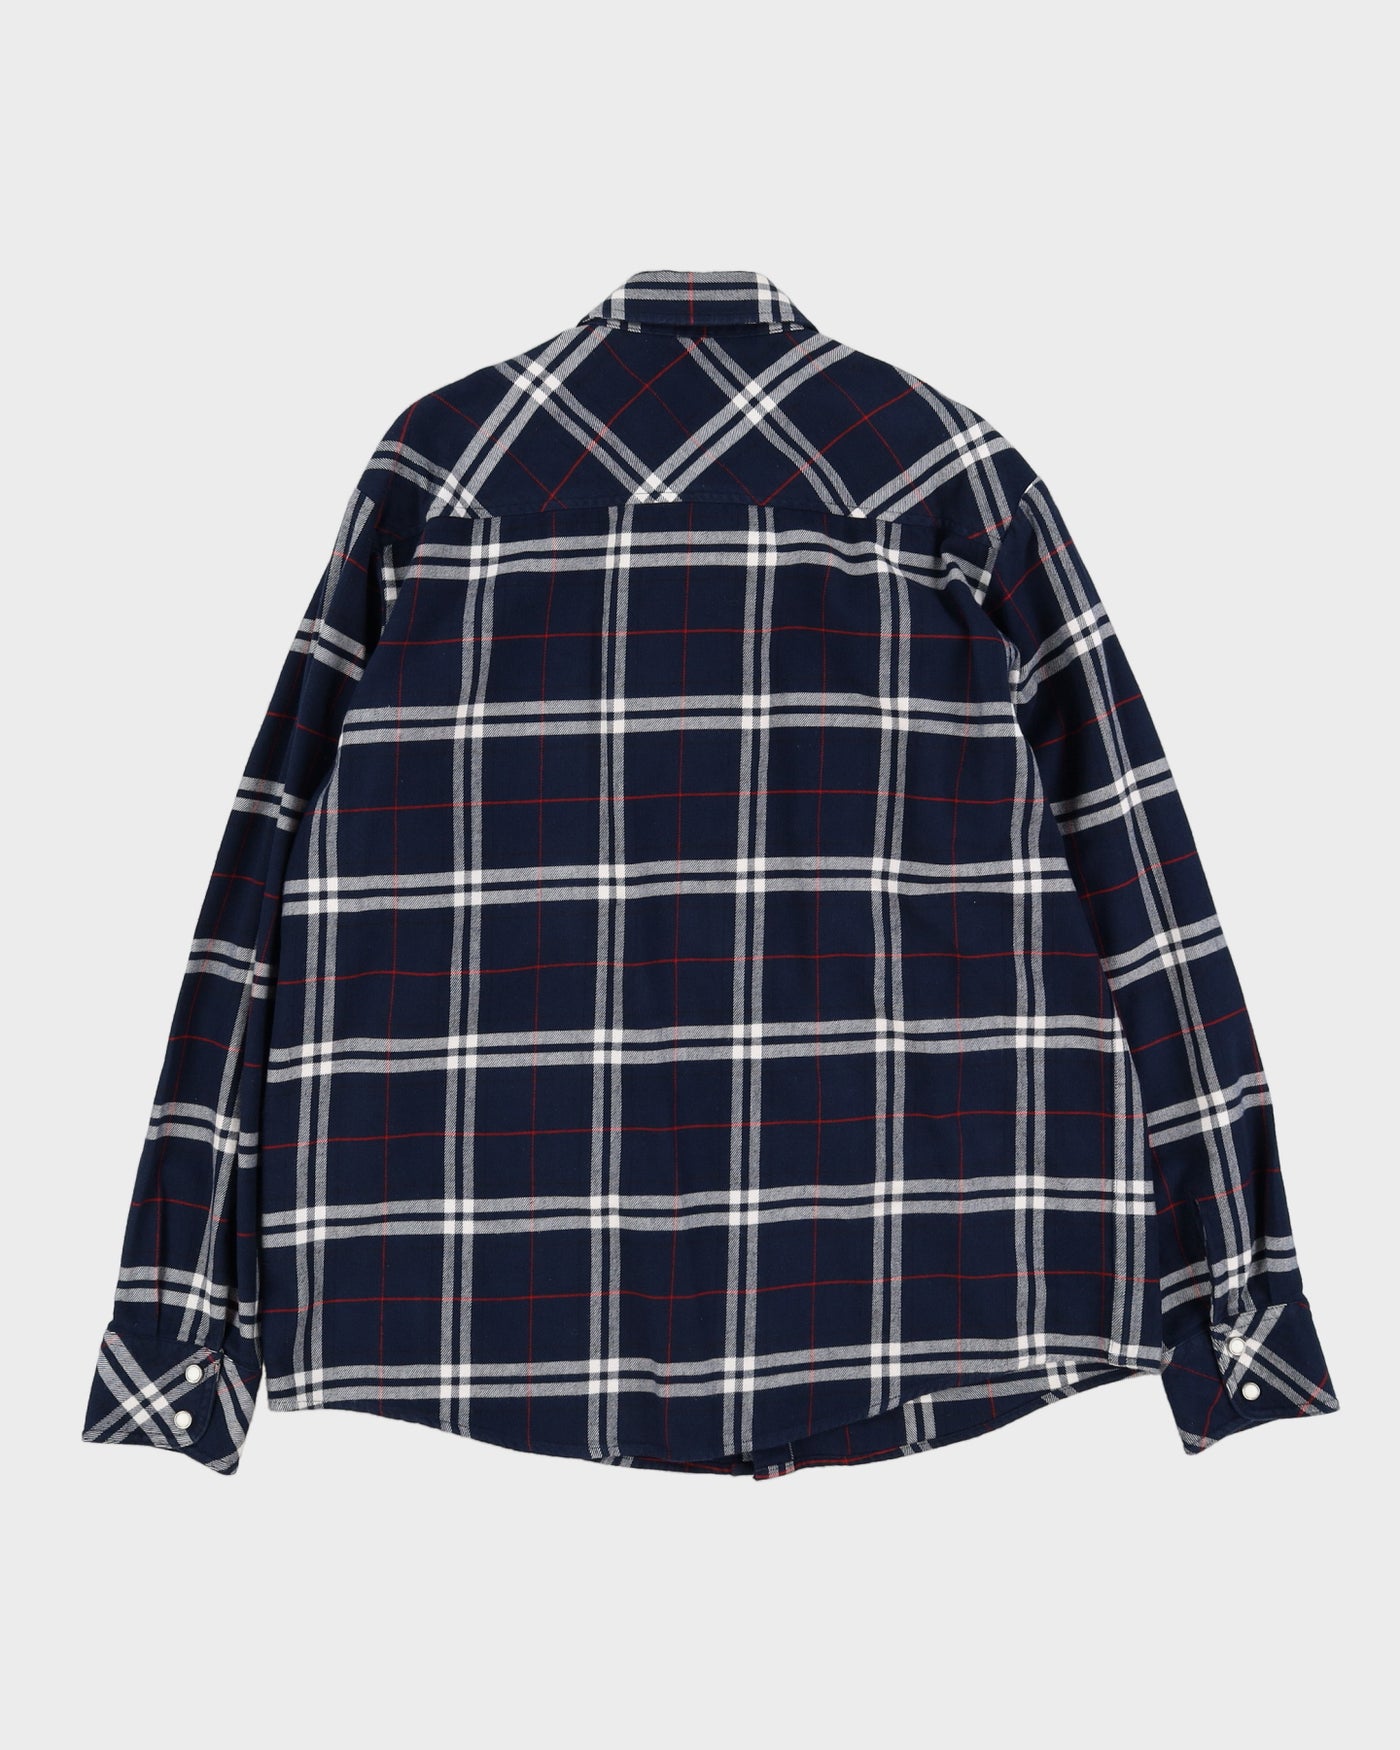 Carhartt Patterned Western Style Flannel Work Shirt - XL